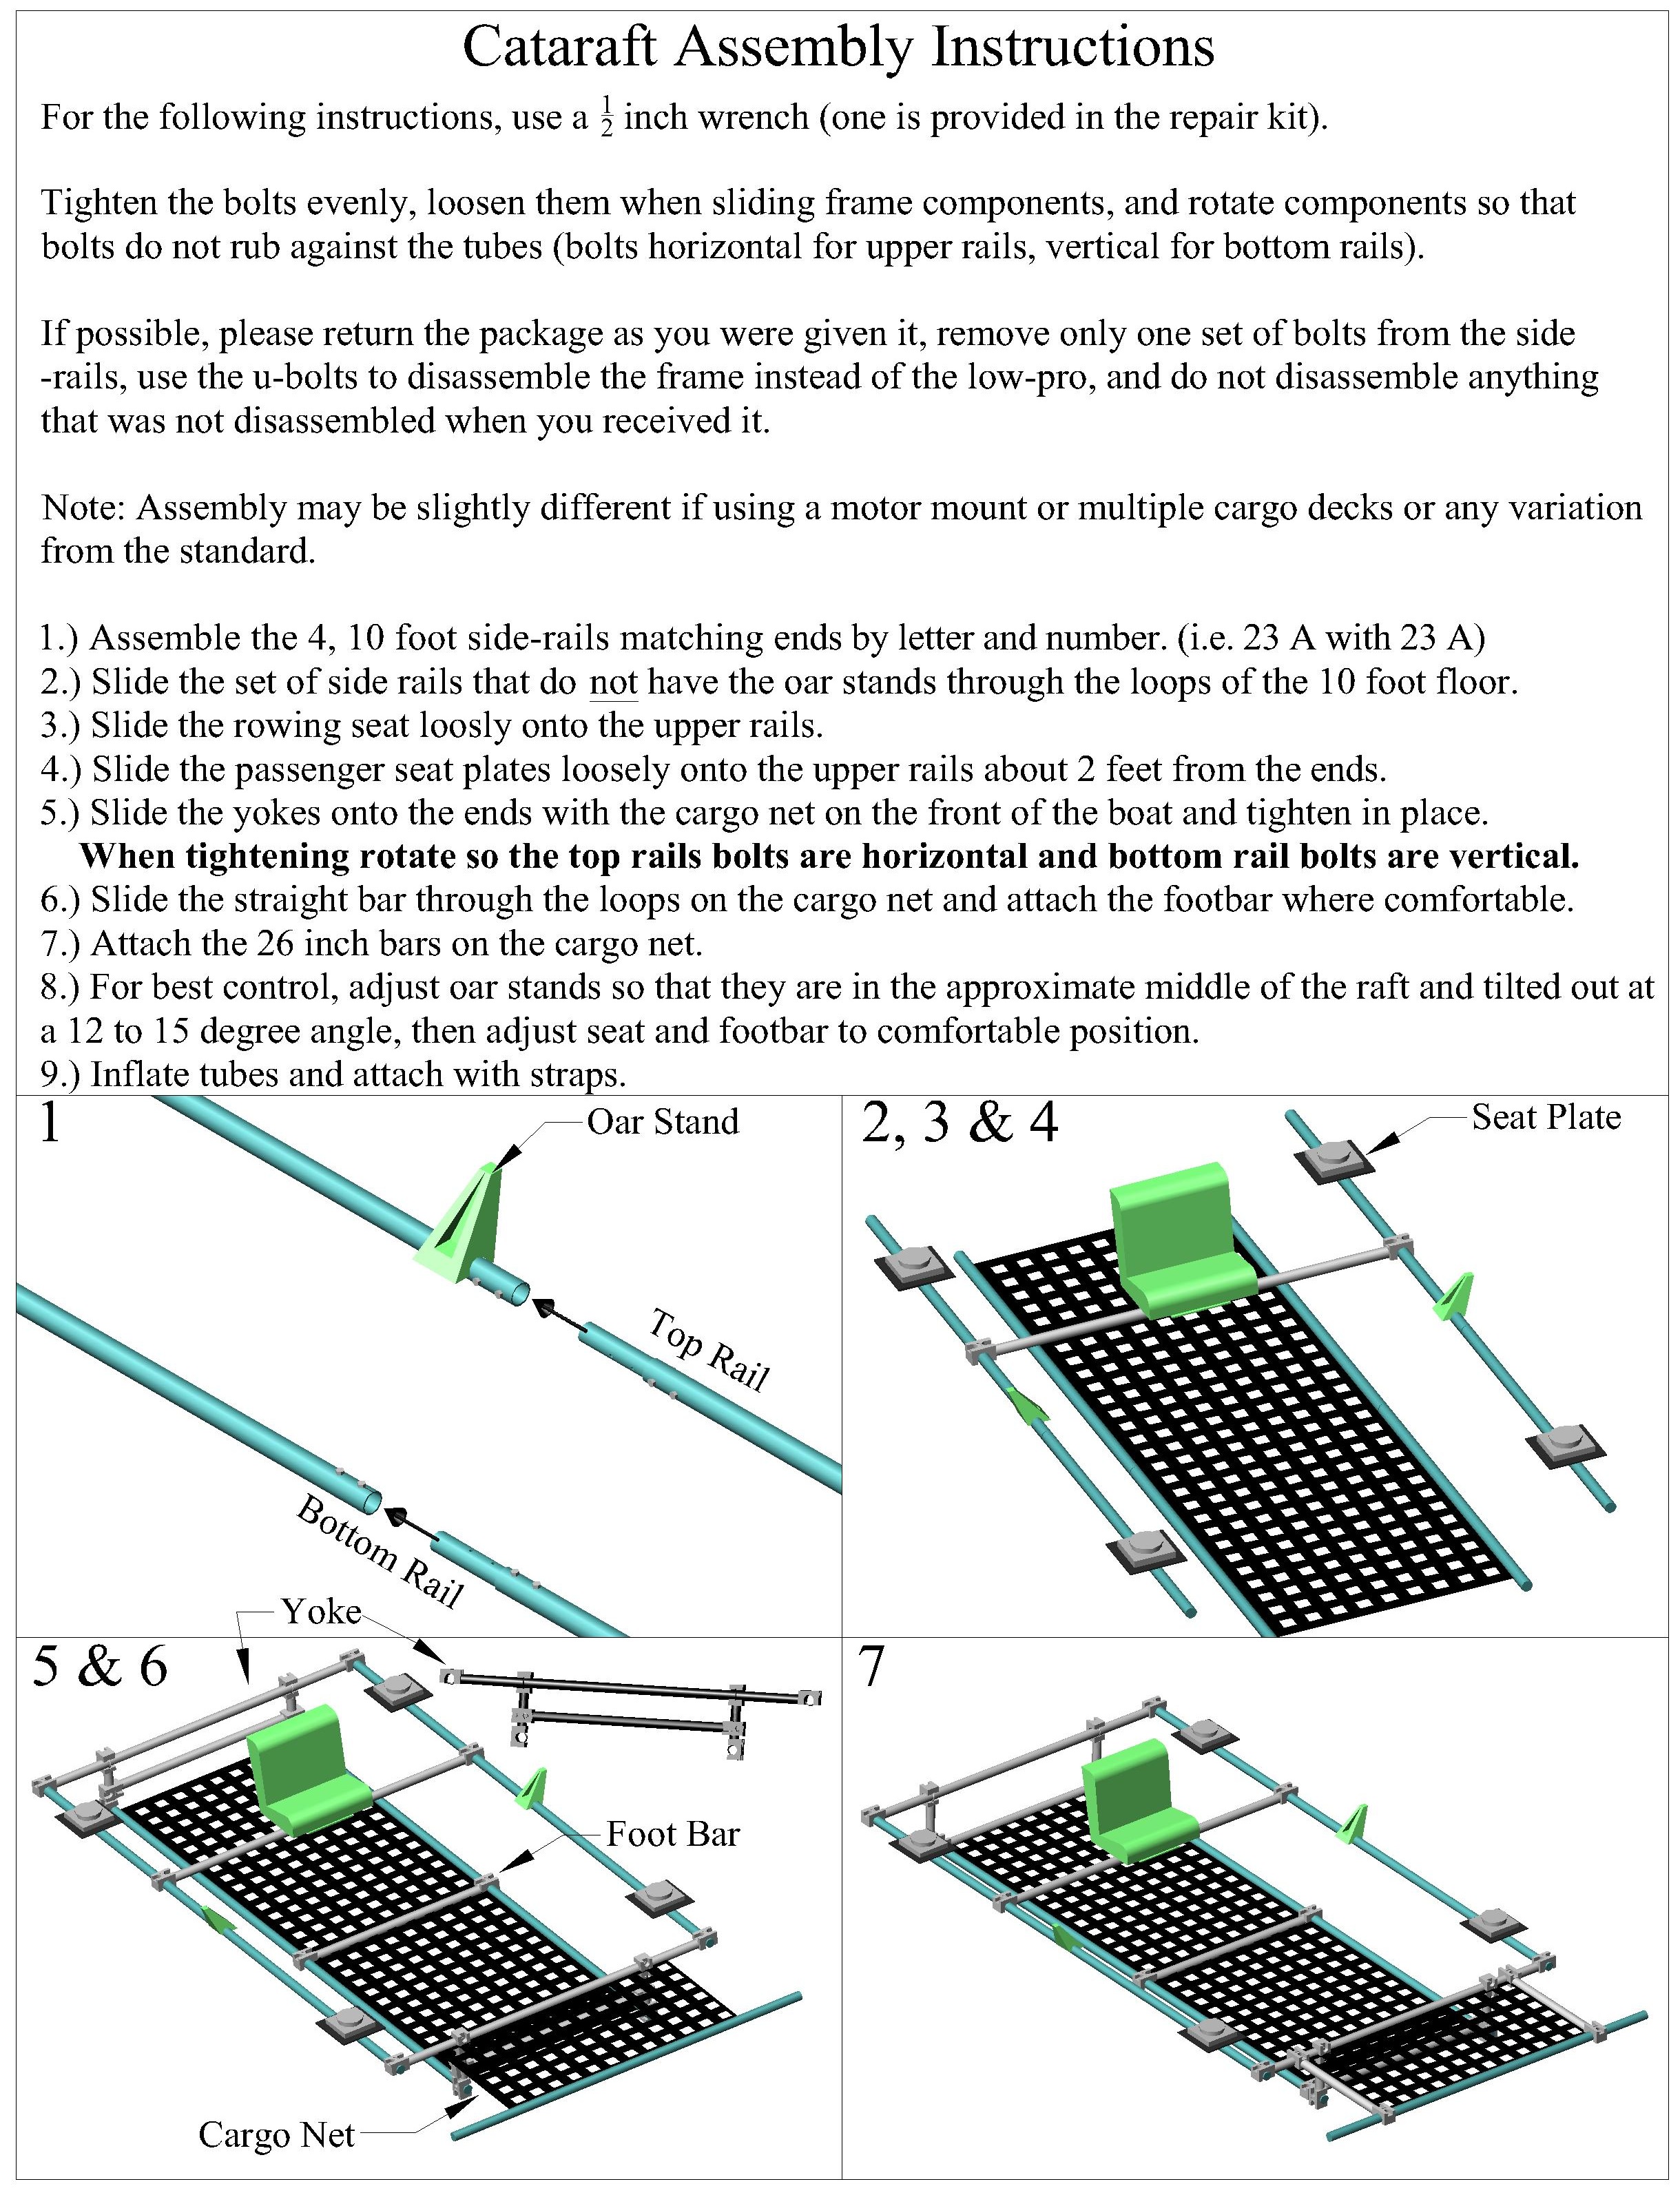 larkin rescue frame manual assembly instructions